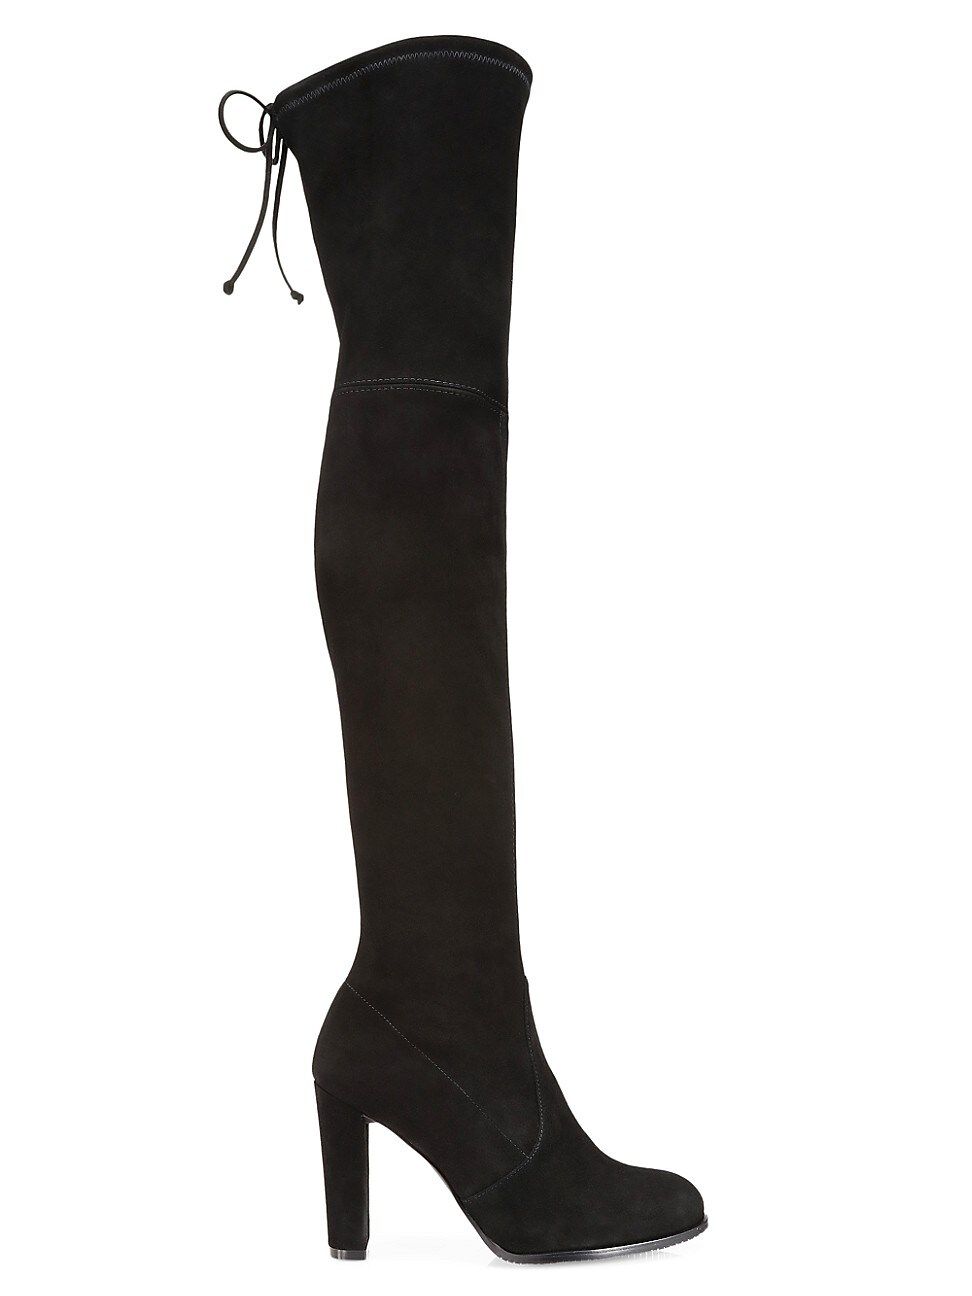 Stuart Weitzman Women's Highland Over-The-Knee Suede Boots - Black - Size 11 | Saks Fifth Avenue